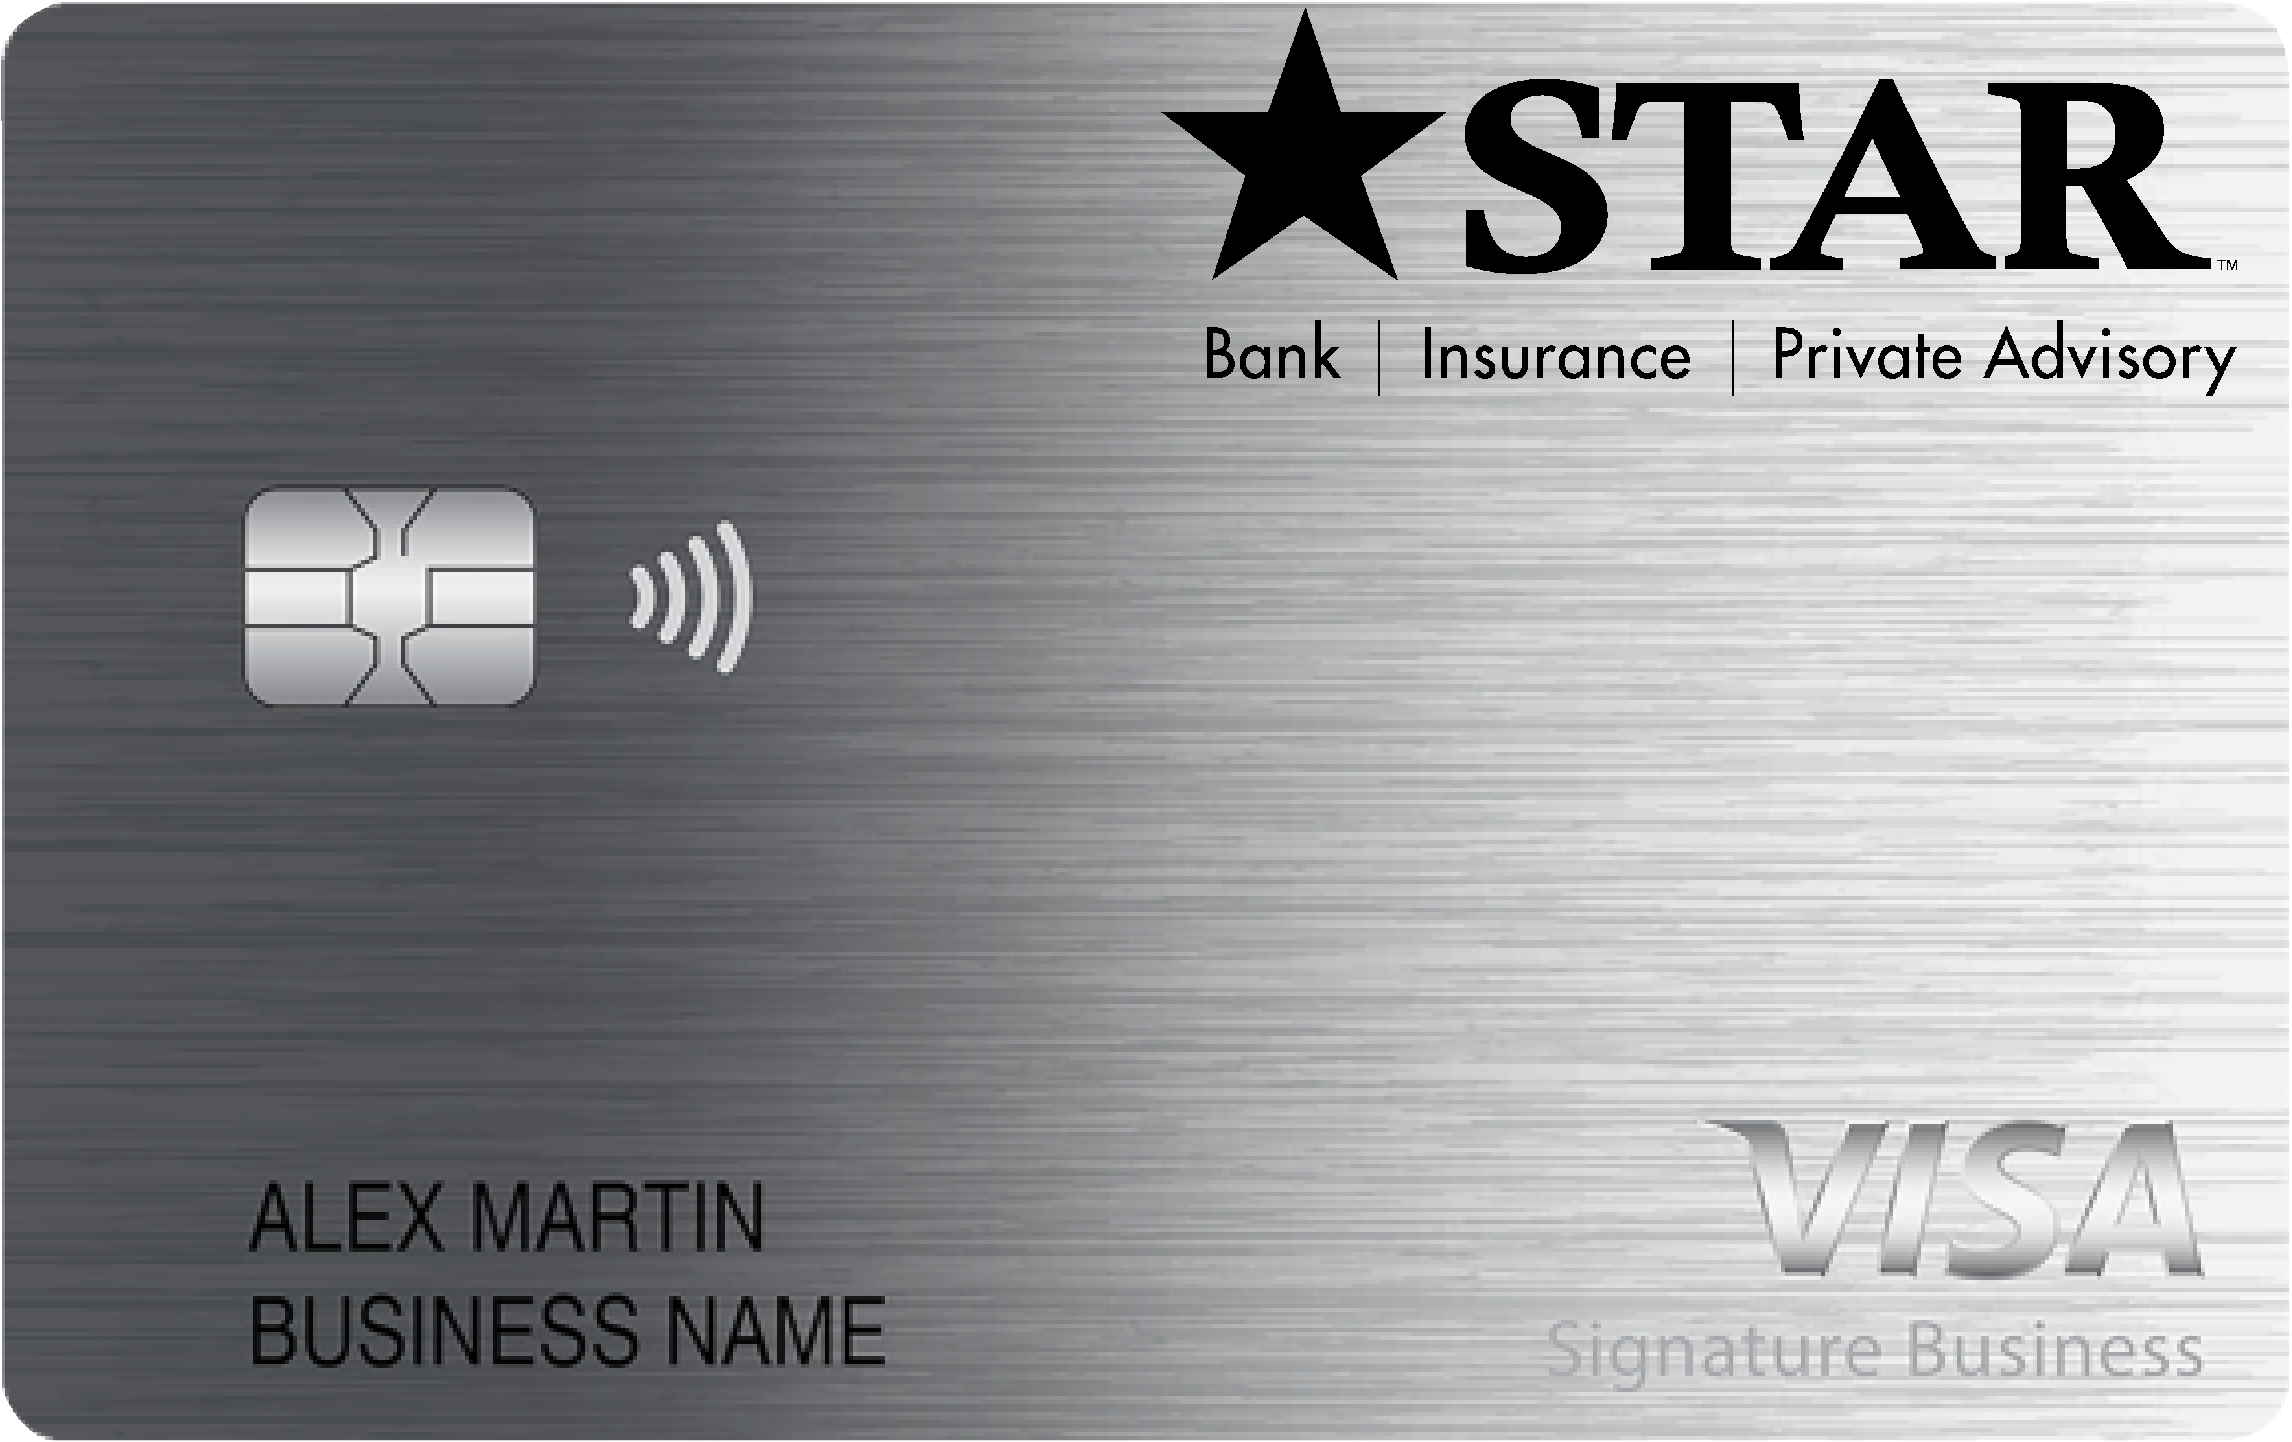 STAR Bank Smart Business Rewards Card